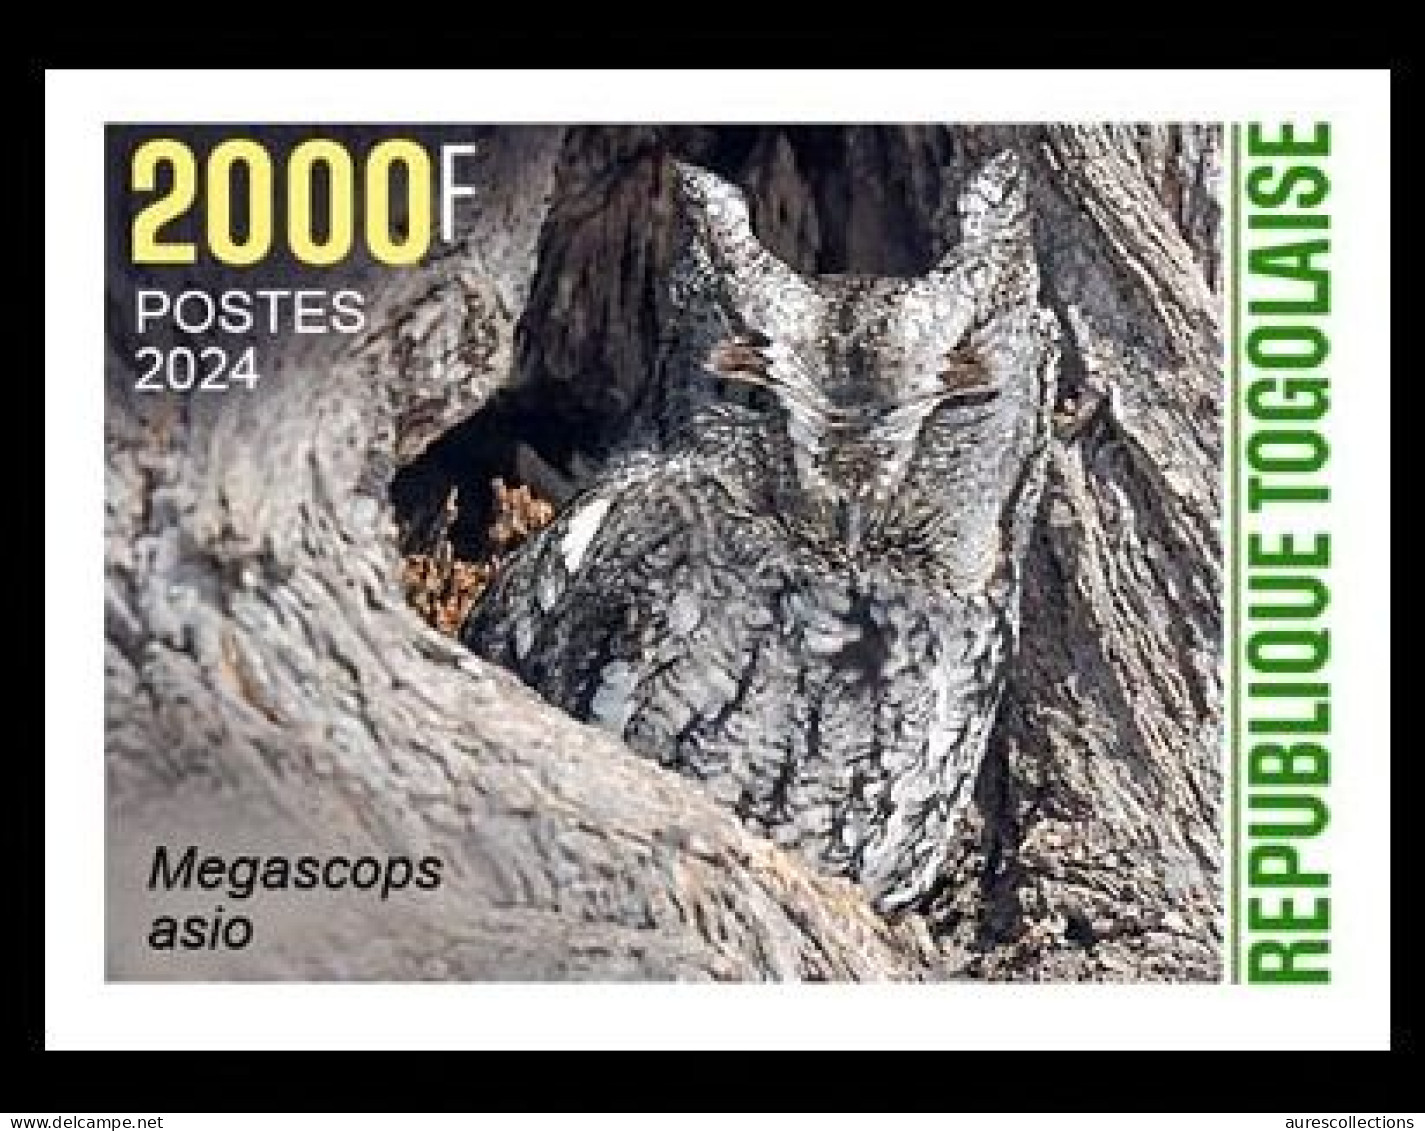 TOGO 2024 STAMP 1V IMPERF 2000F - CAMOUFLAGE - OWL OWLS HIBOU HIBOUX - BIRDS OISEAUX - MNH - Gufi E Civette